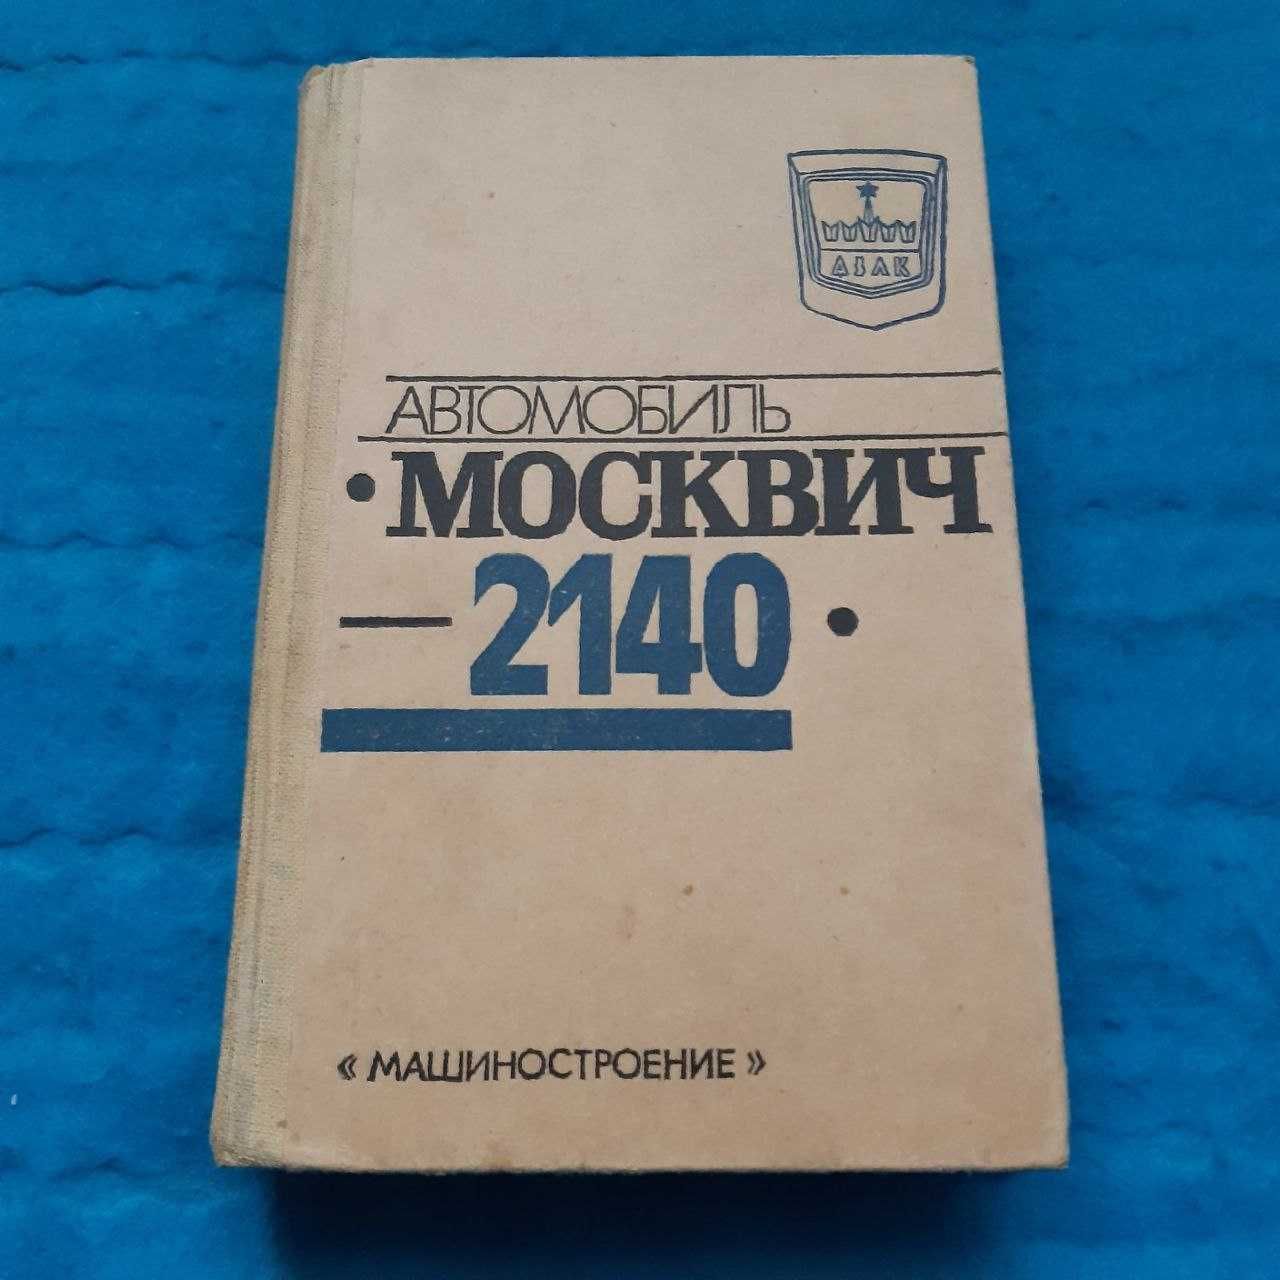 Ретро авто книга "Автомобиль Москвич-2140"